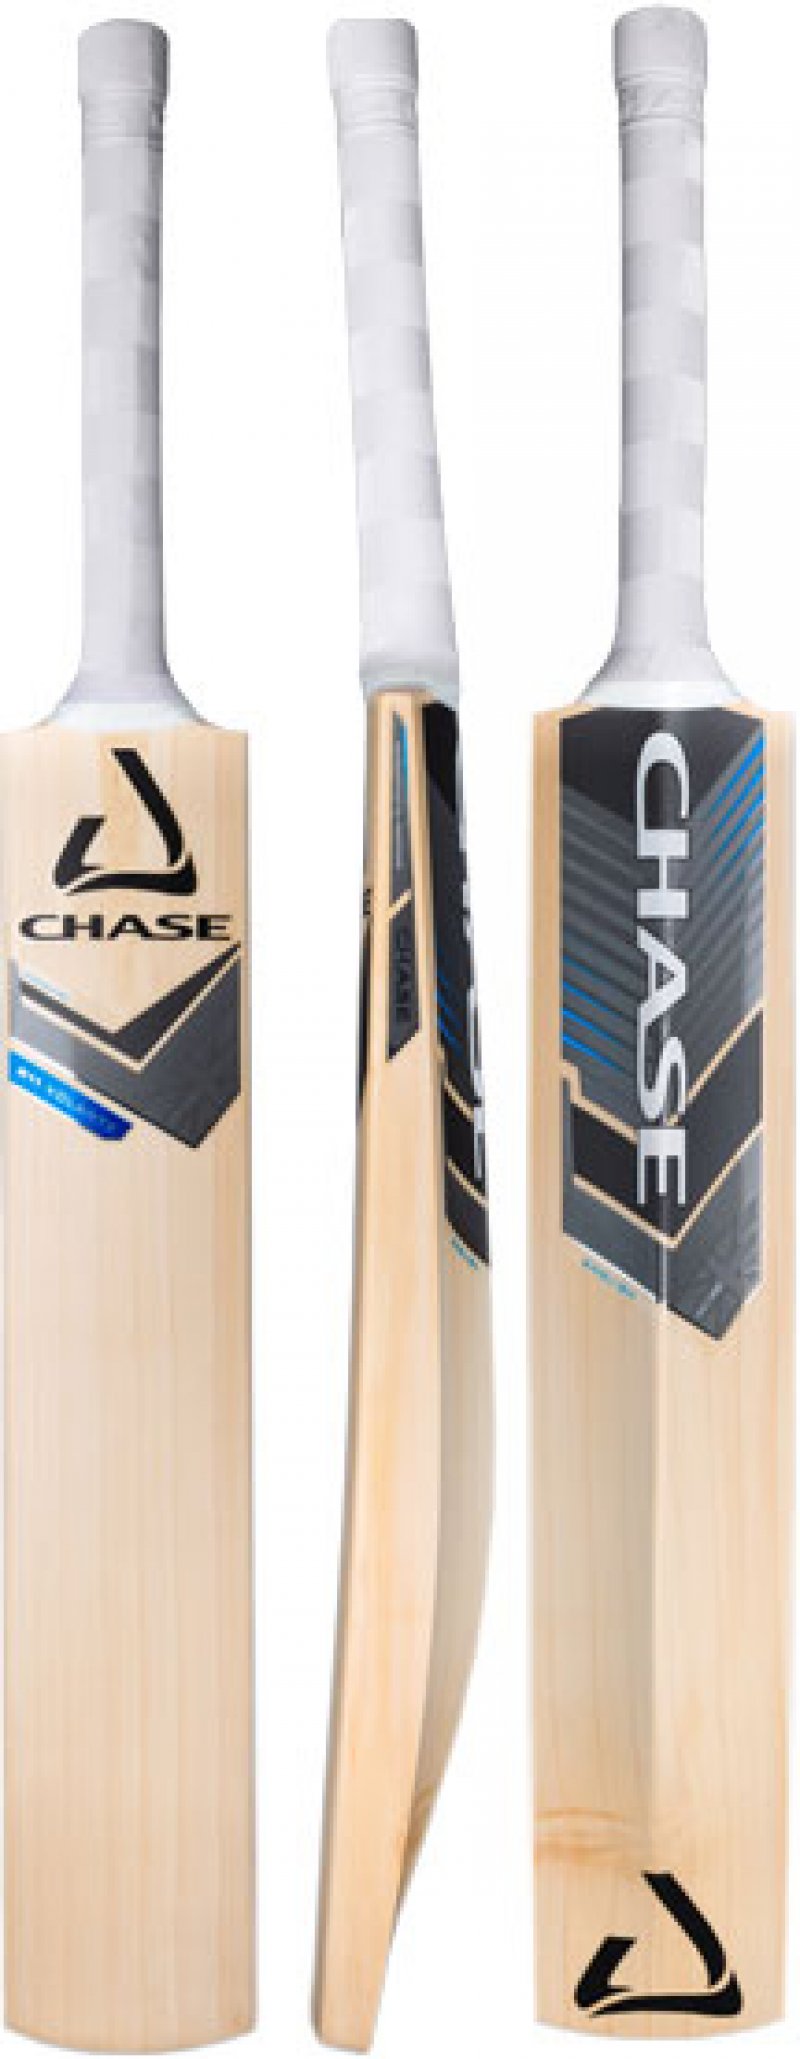 Chase Volante R11 Cricket Bat